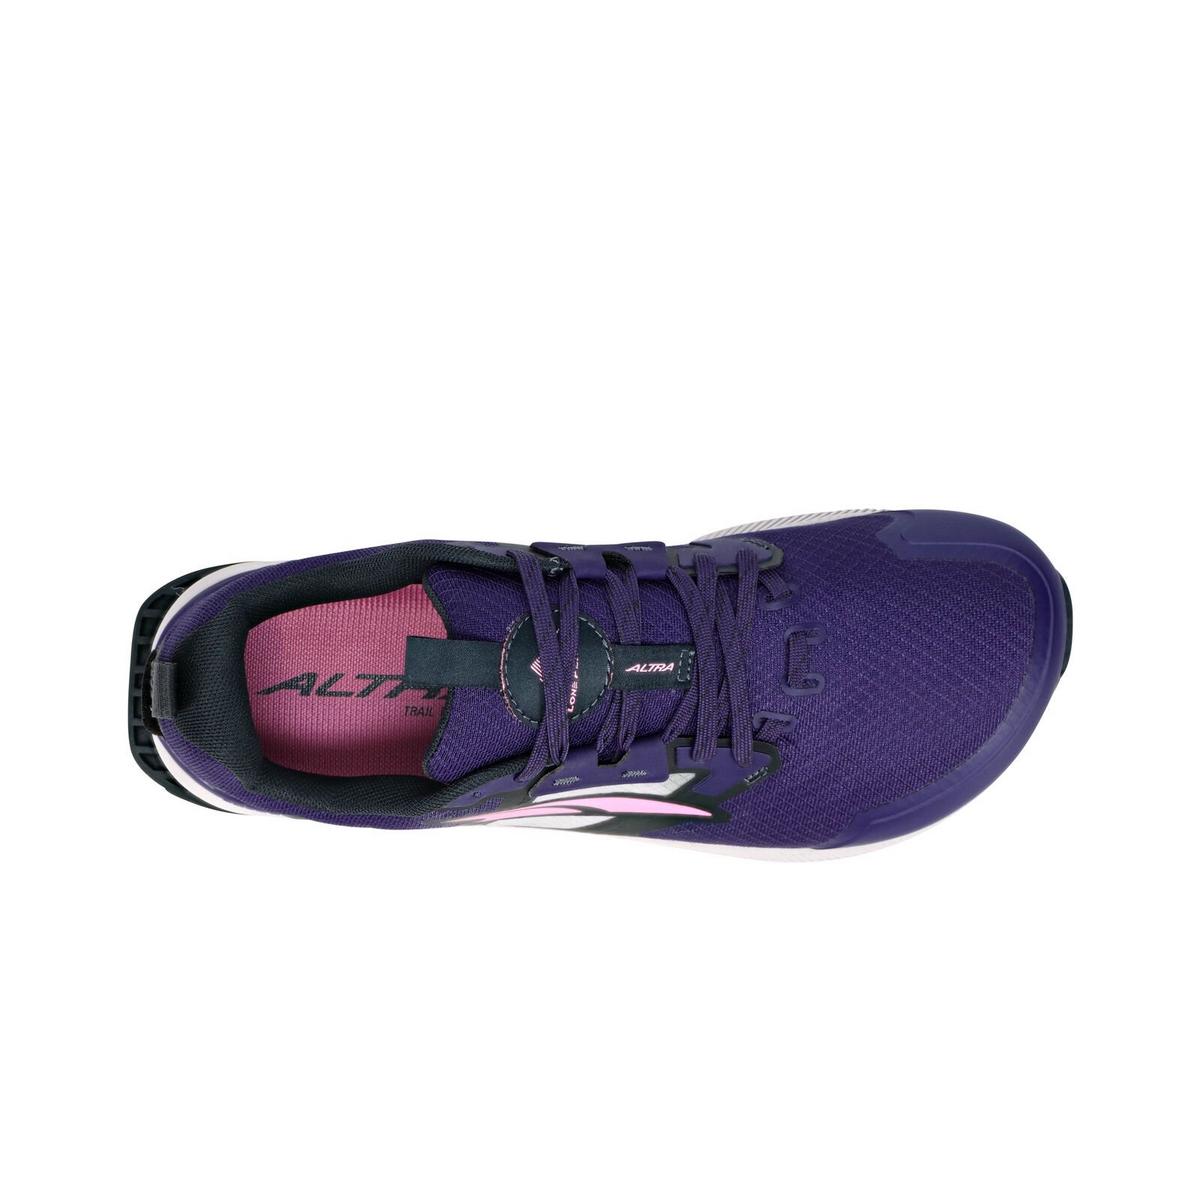 Altra Women's Lone Peak 7 Trail Running Shoes - Purple